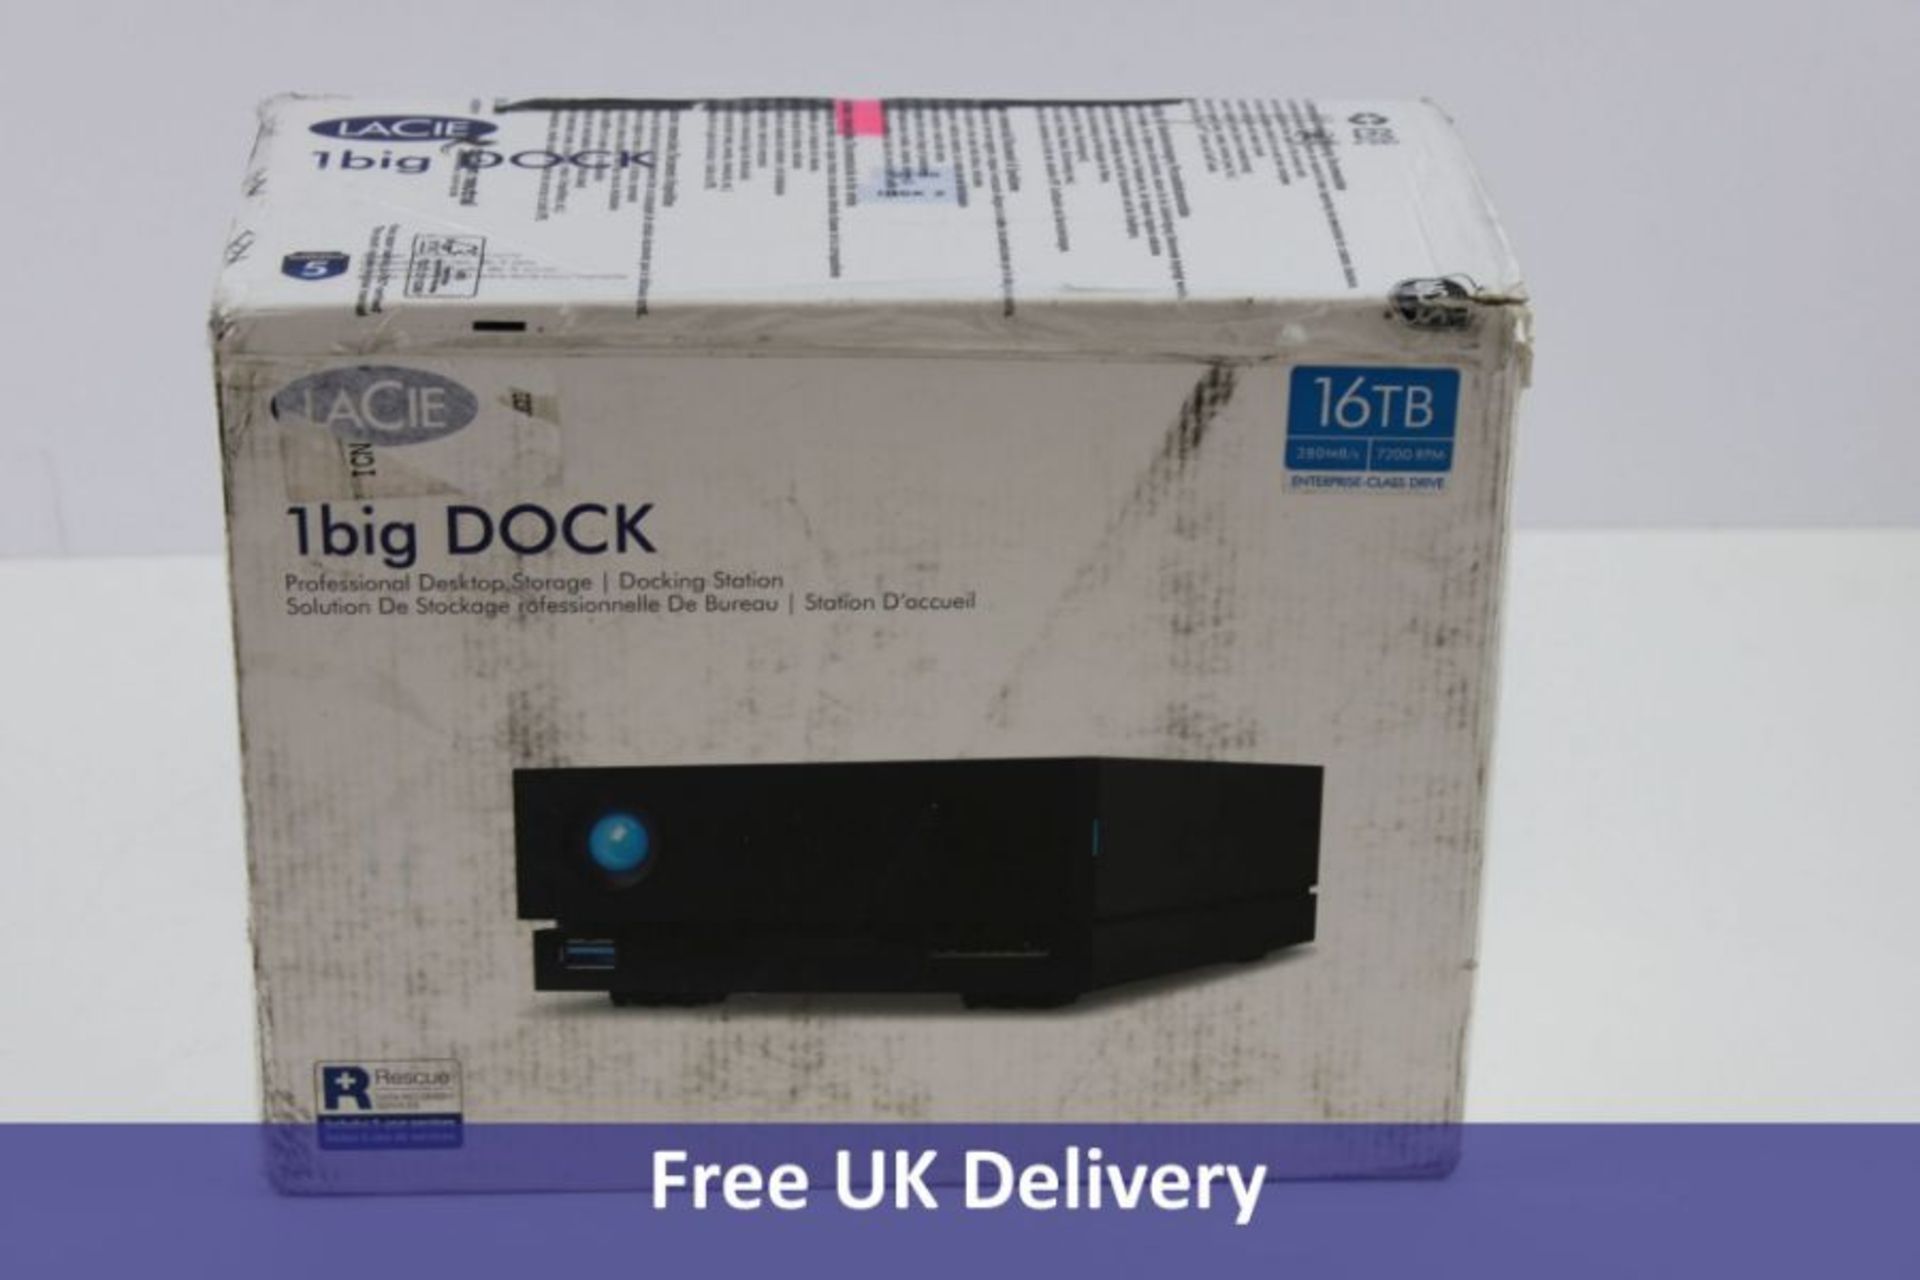 LaCie 1big Dock Storage, 16TB, Black